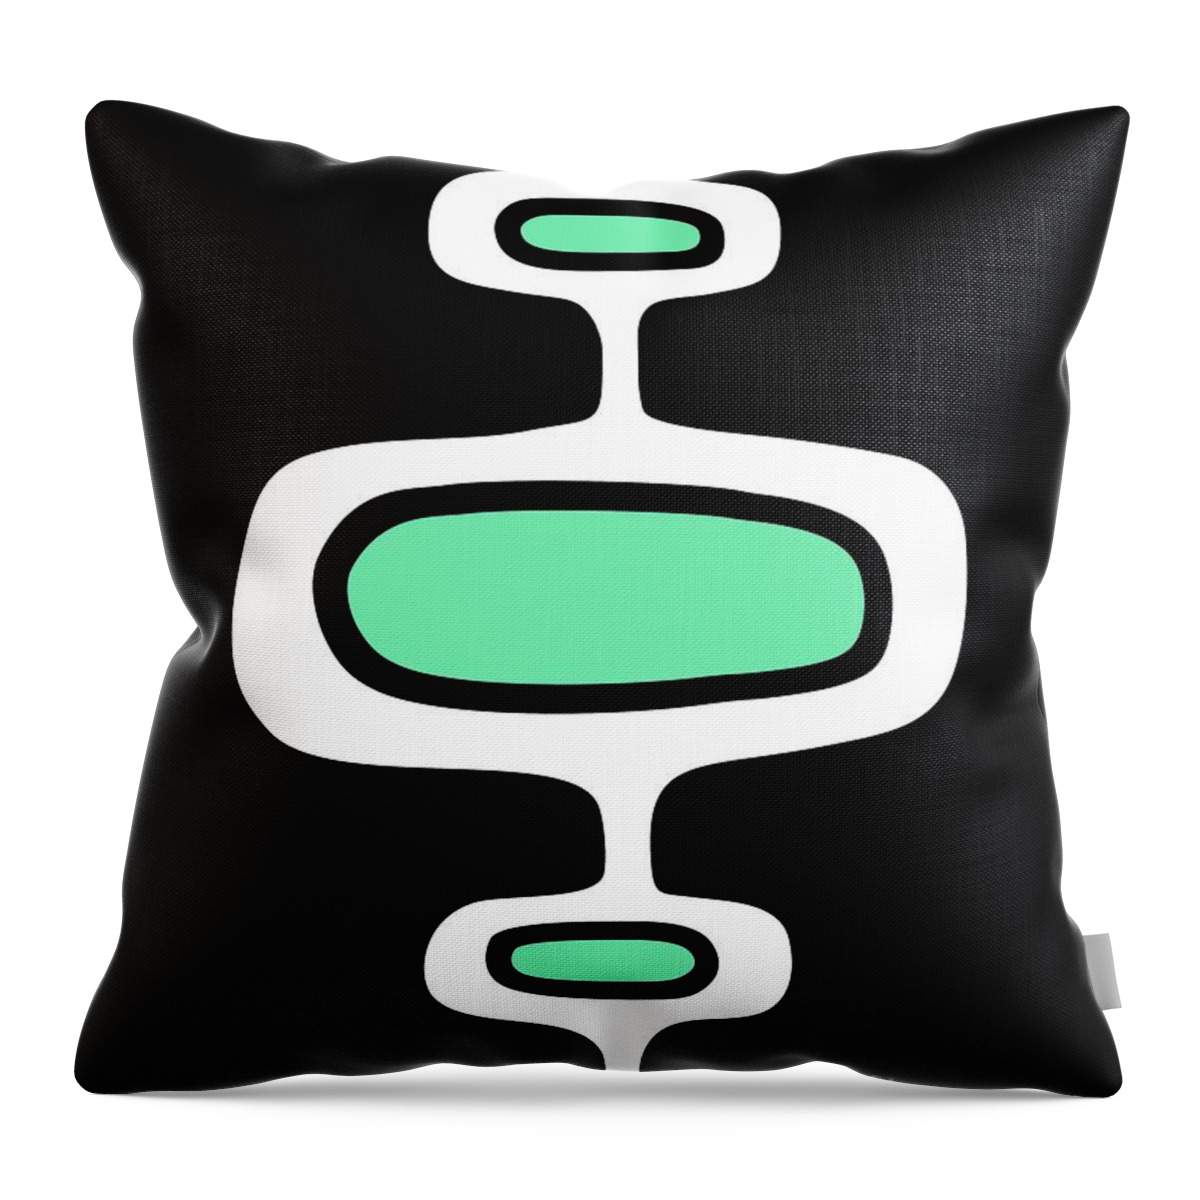 Mid Century Modern Throw Pillow featuring the digital art Aqua Mod Pod 1 on Black by Donna Mibus